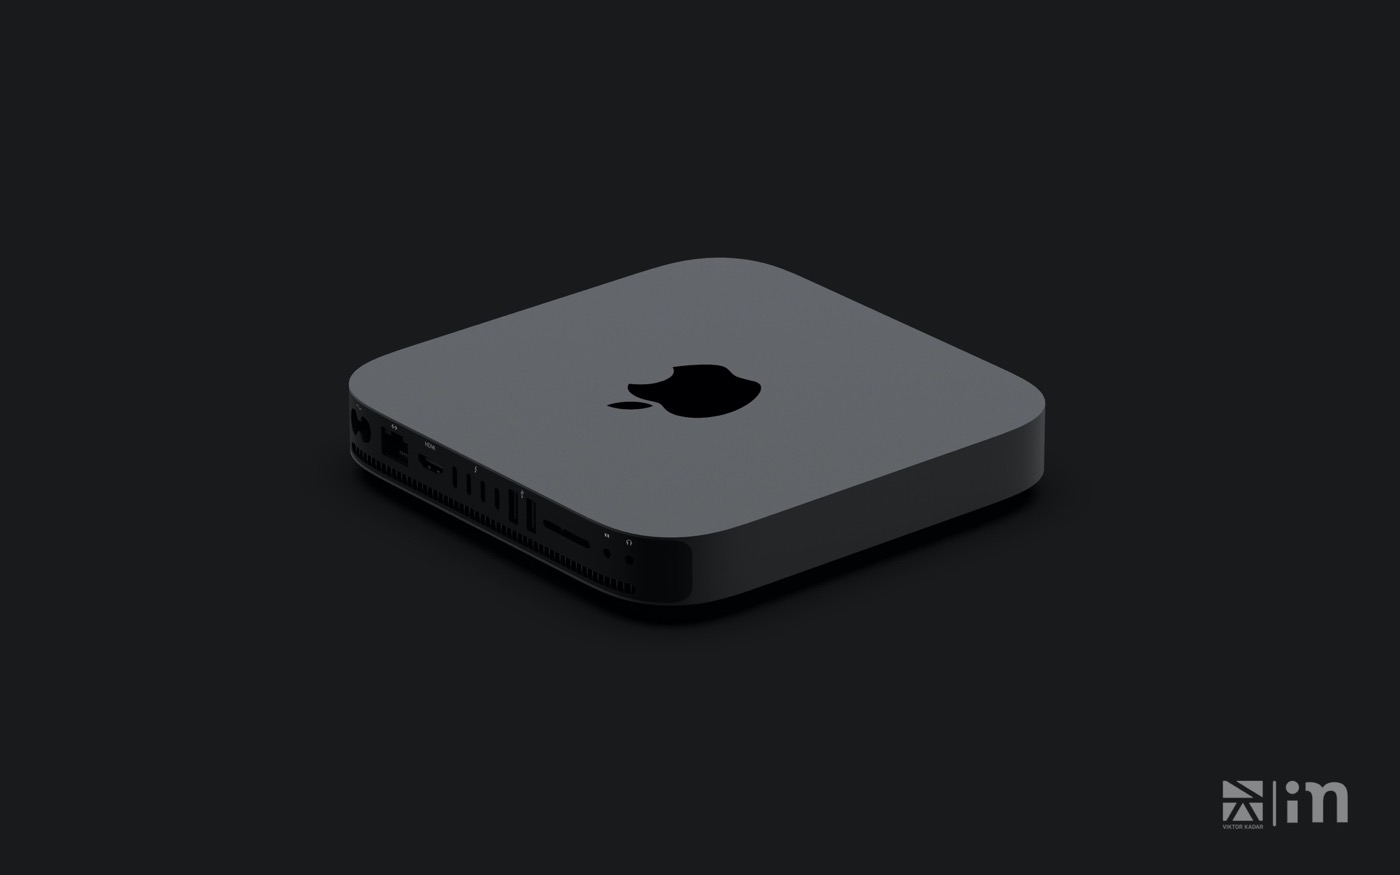 ｢Mac mini Pro｣のコンセプト画像